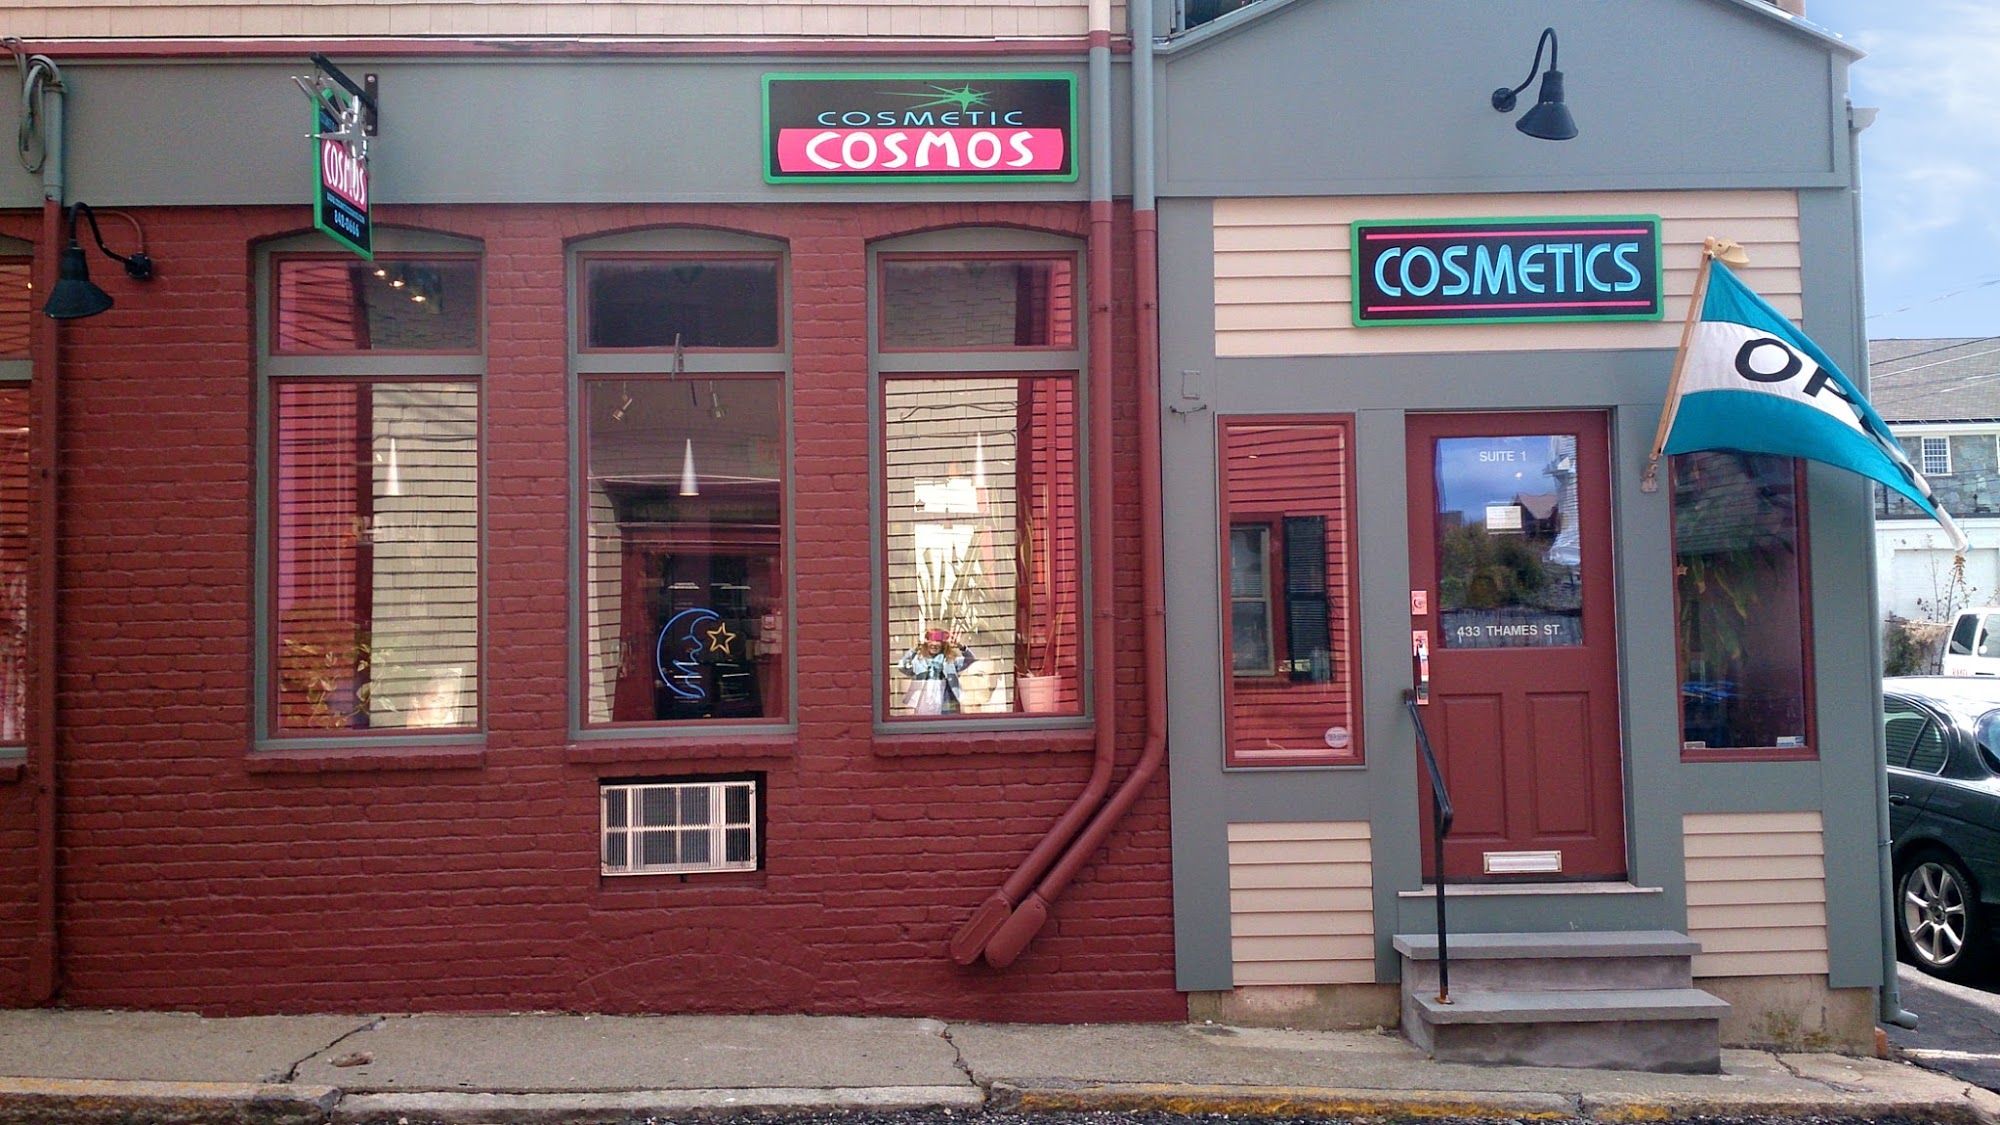 Cosmetic Cosmos